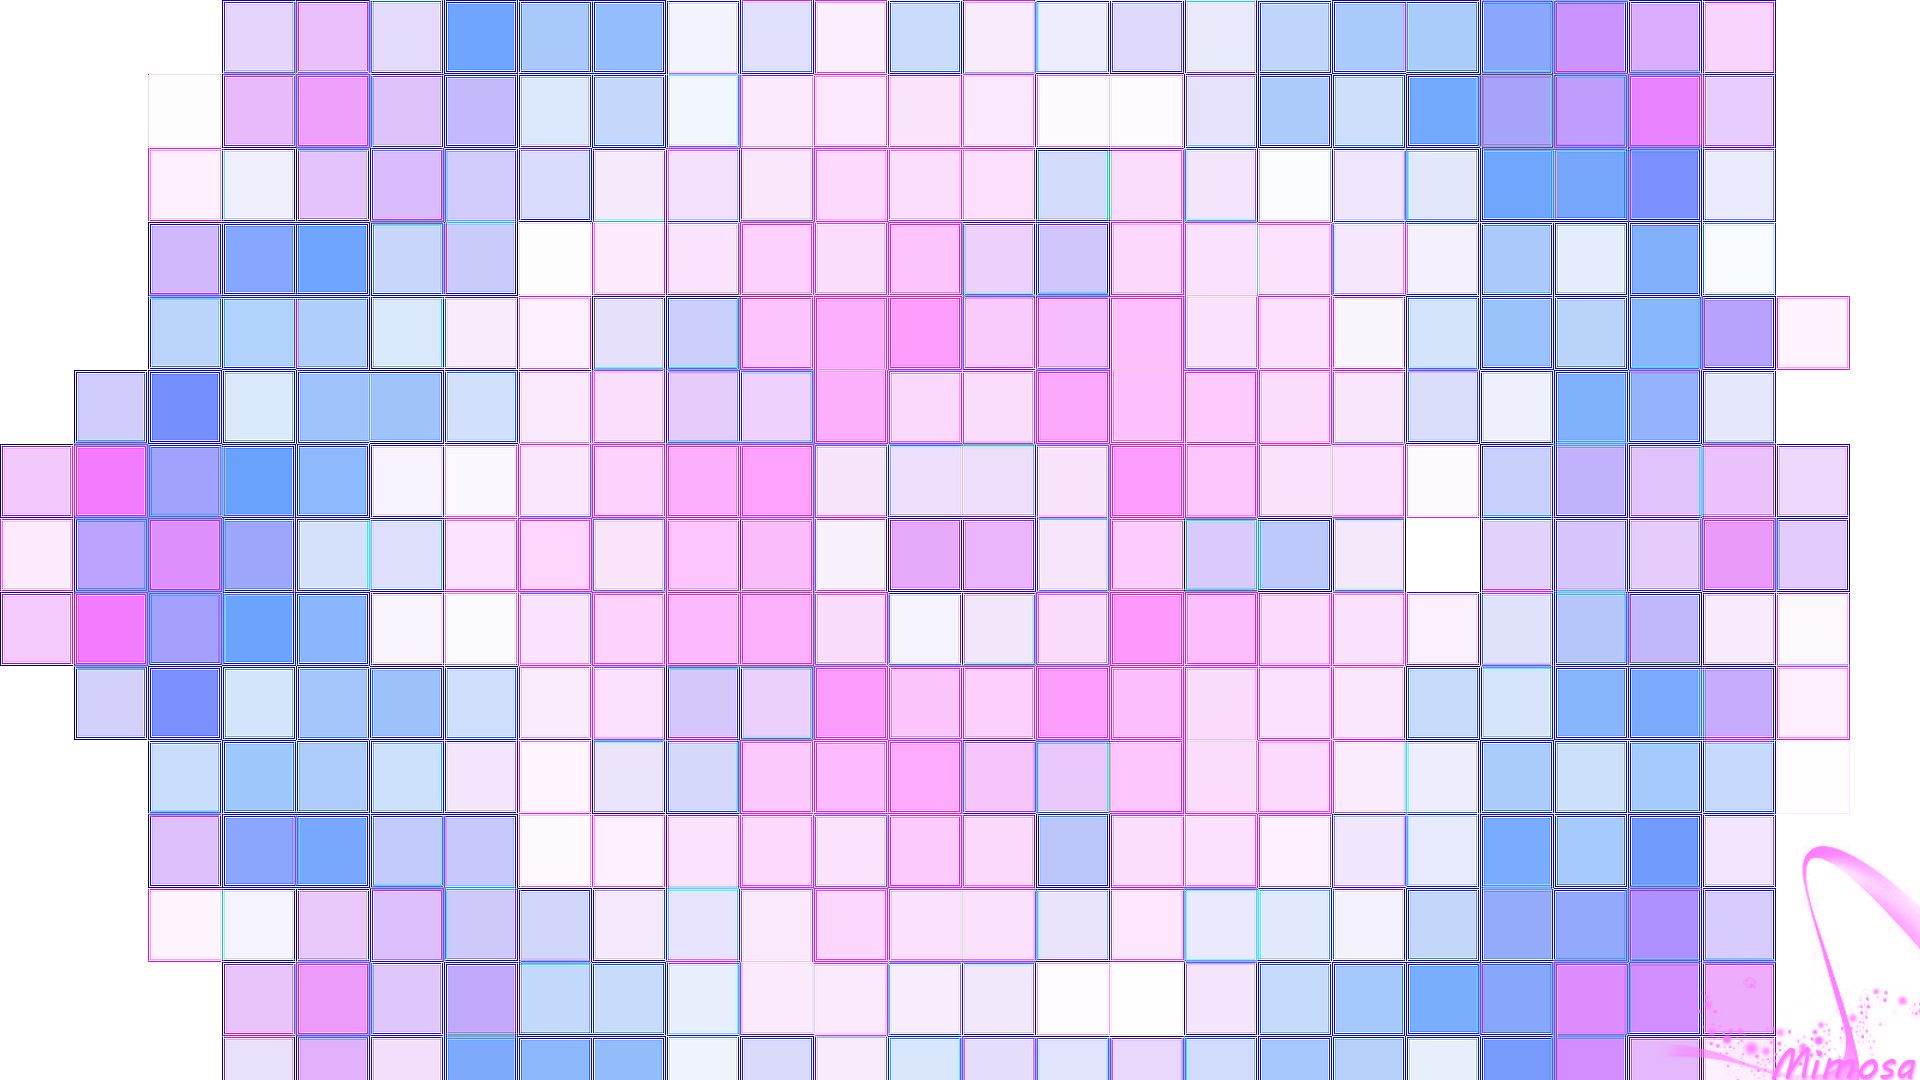 1920x1080 Shapes, Square, Abstract, Pink, Digital Art, Geometry, Colorful, Blue, White wallpaper JPG. Mocah.org HD Desktop Wallpaper